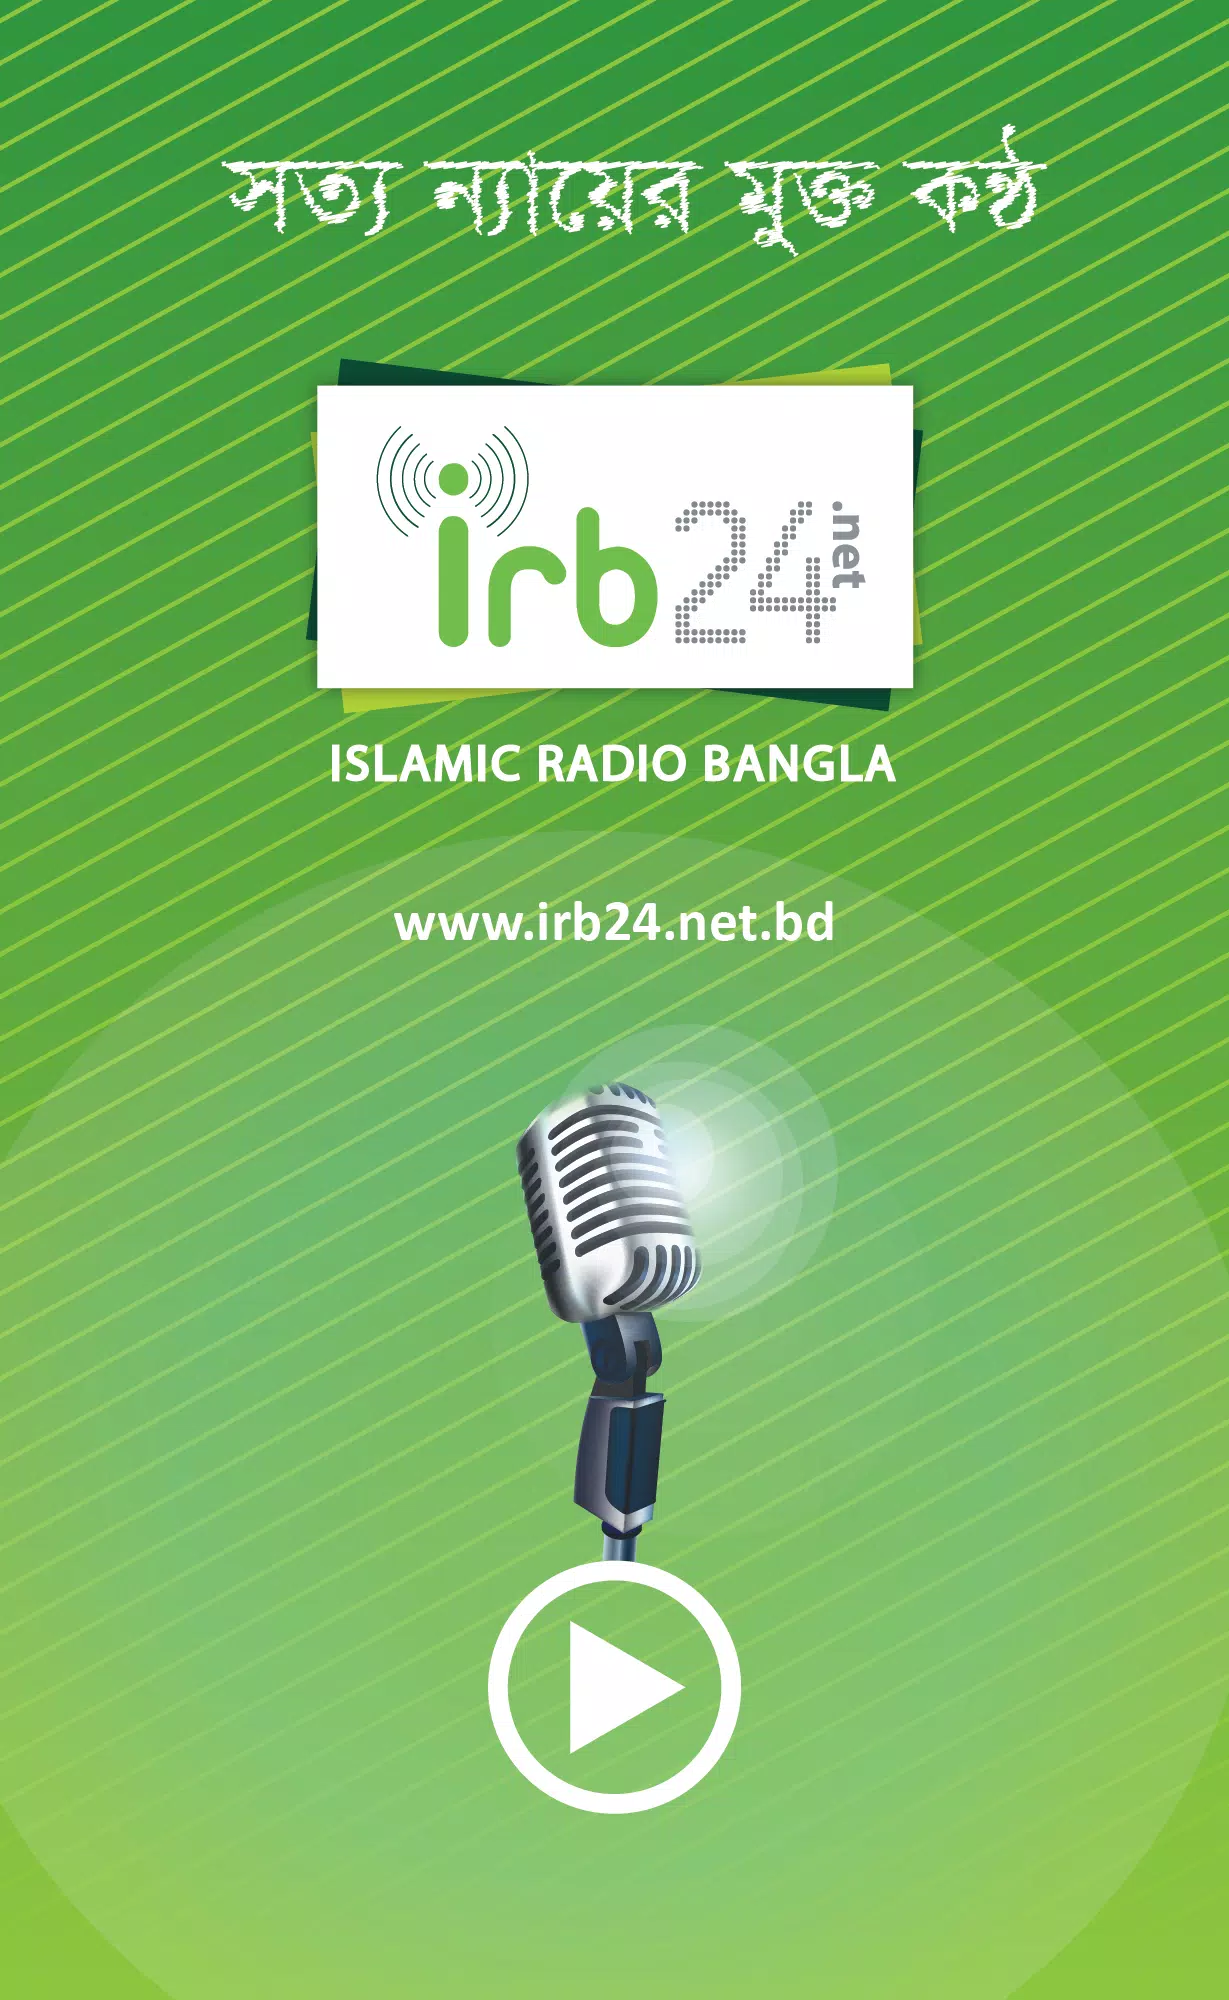 Islamic Radio Bangla - IRB APK for Android Download